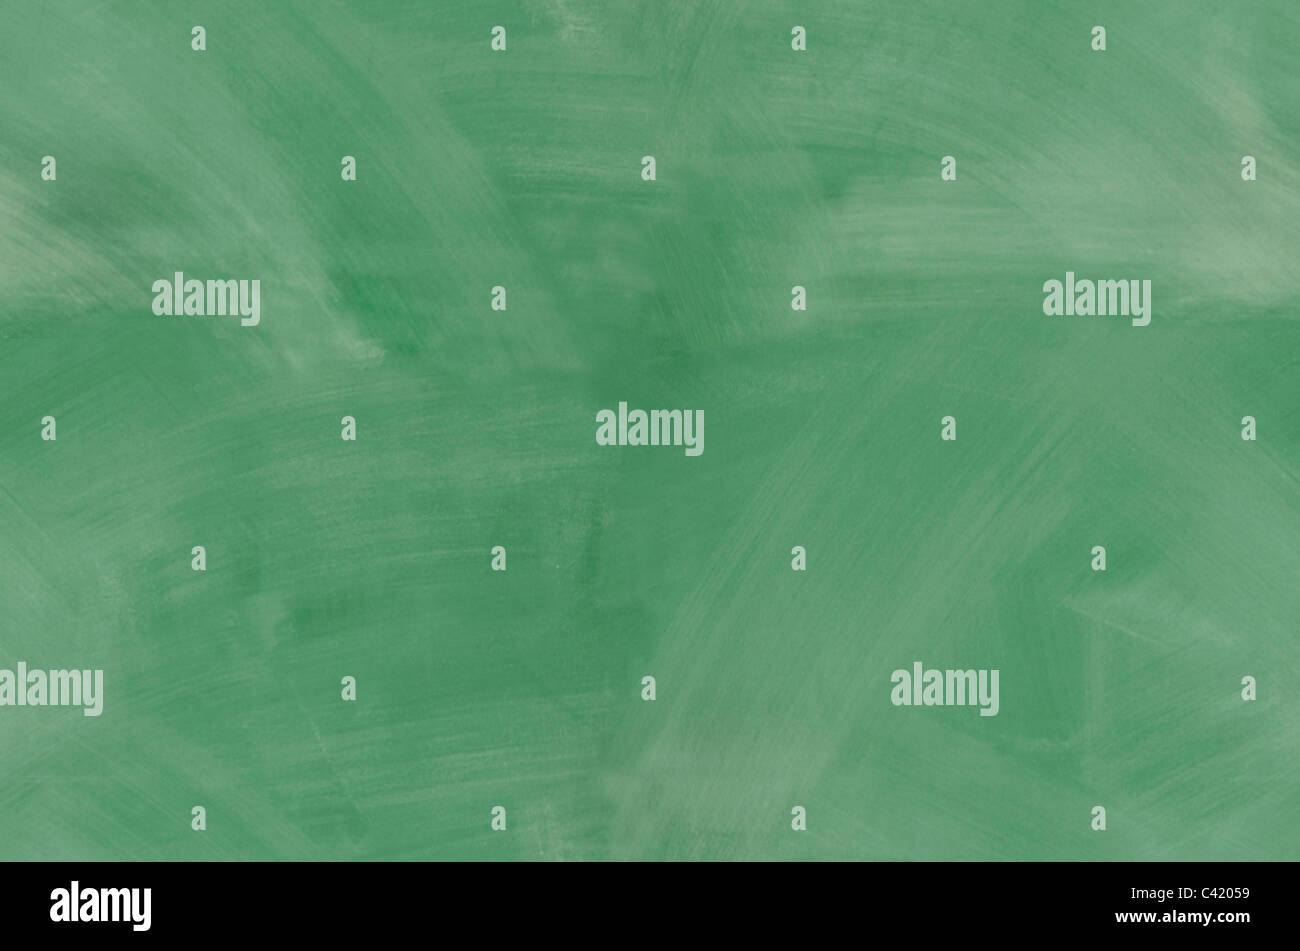 Grünen Tafel mit Kreide beschmiert Radiergummi markiert nahtlos aneinander Stockfoto